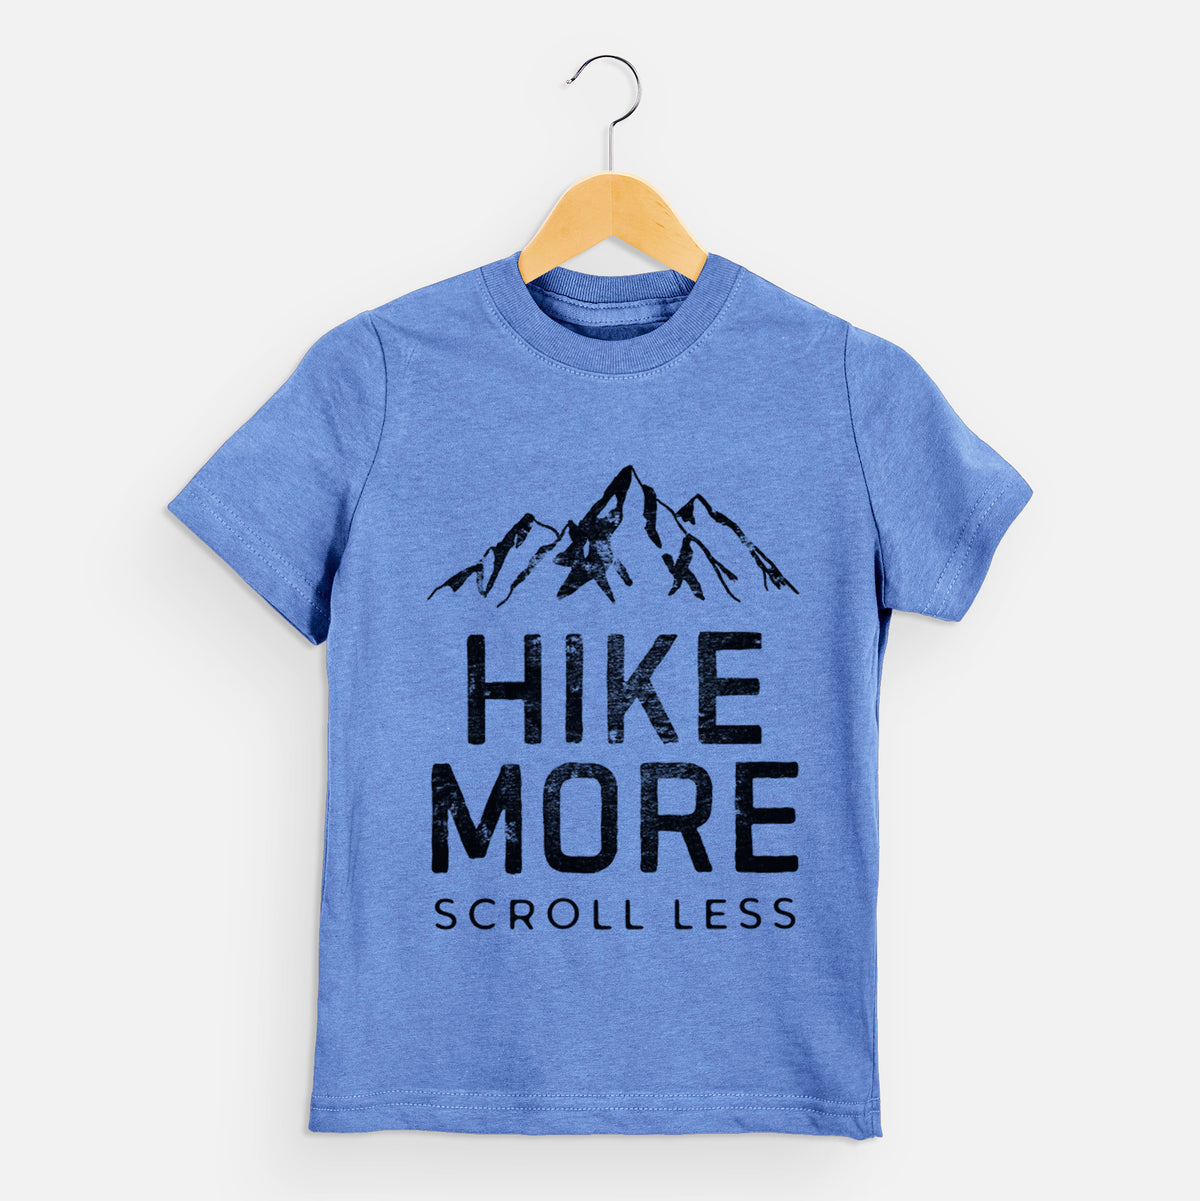 Hike More - Scroll Less - Kids Shirt